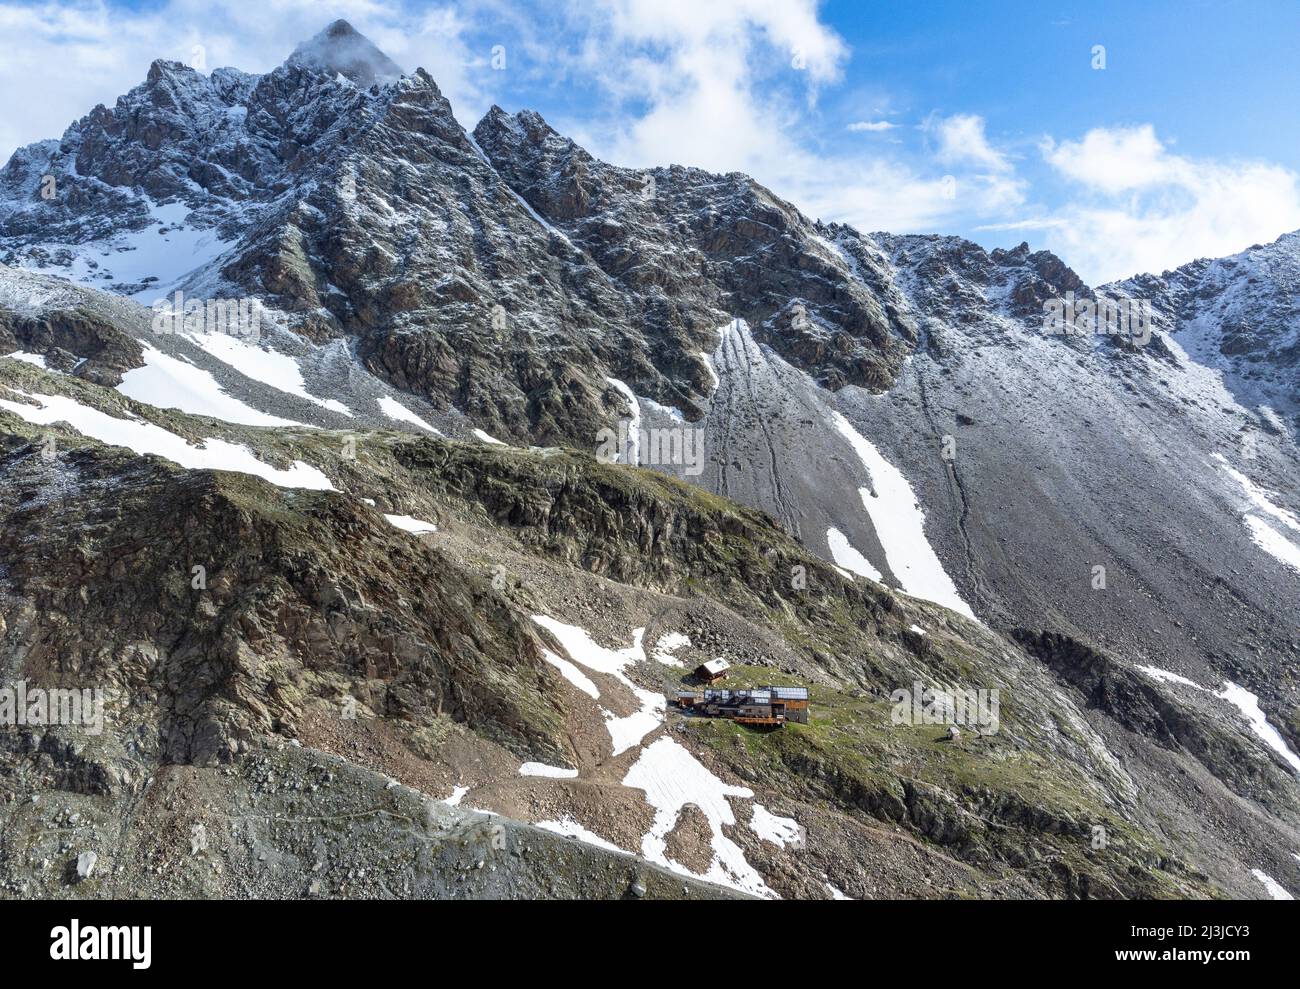 Europe, Alps, Austria, Tyrol, Pitztal, Kaunergrat, view of the Kaunergrat hut in front of the Verpeil peak Stock Photo